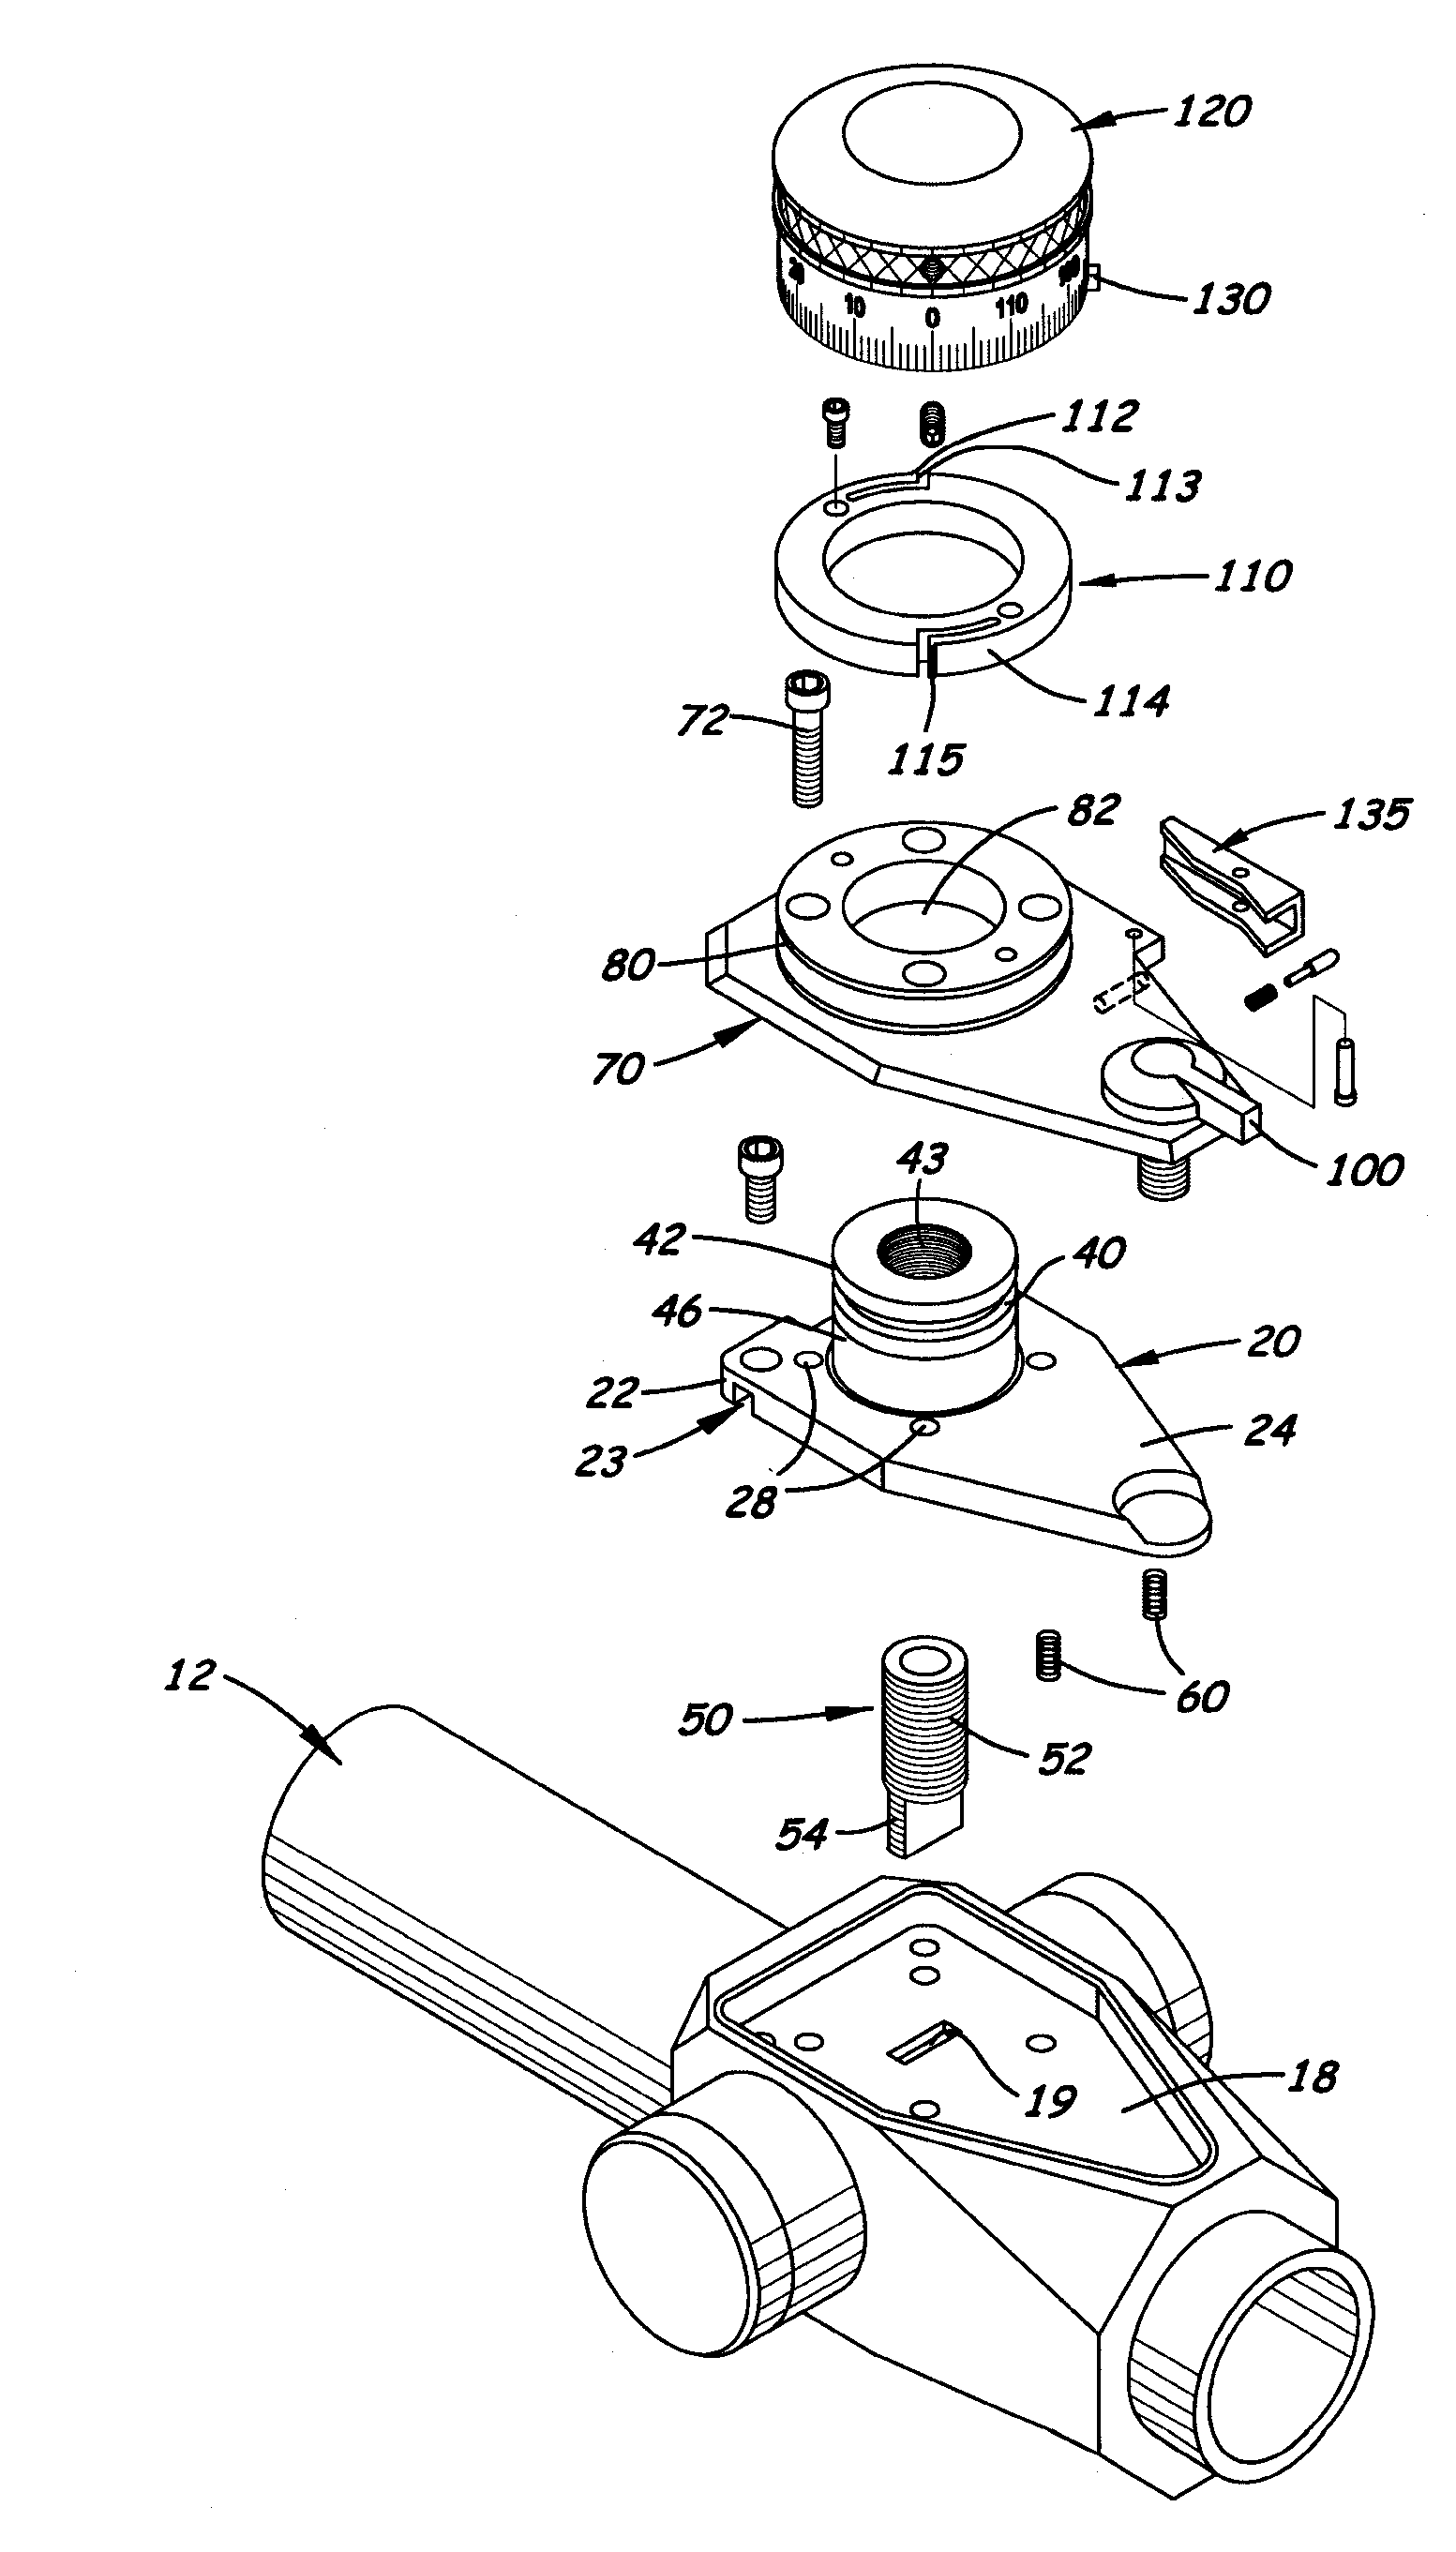 Locking Adjustment Dial Mechanism for Riflescope